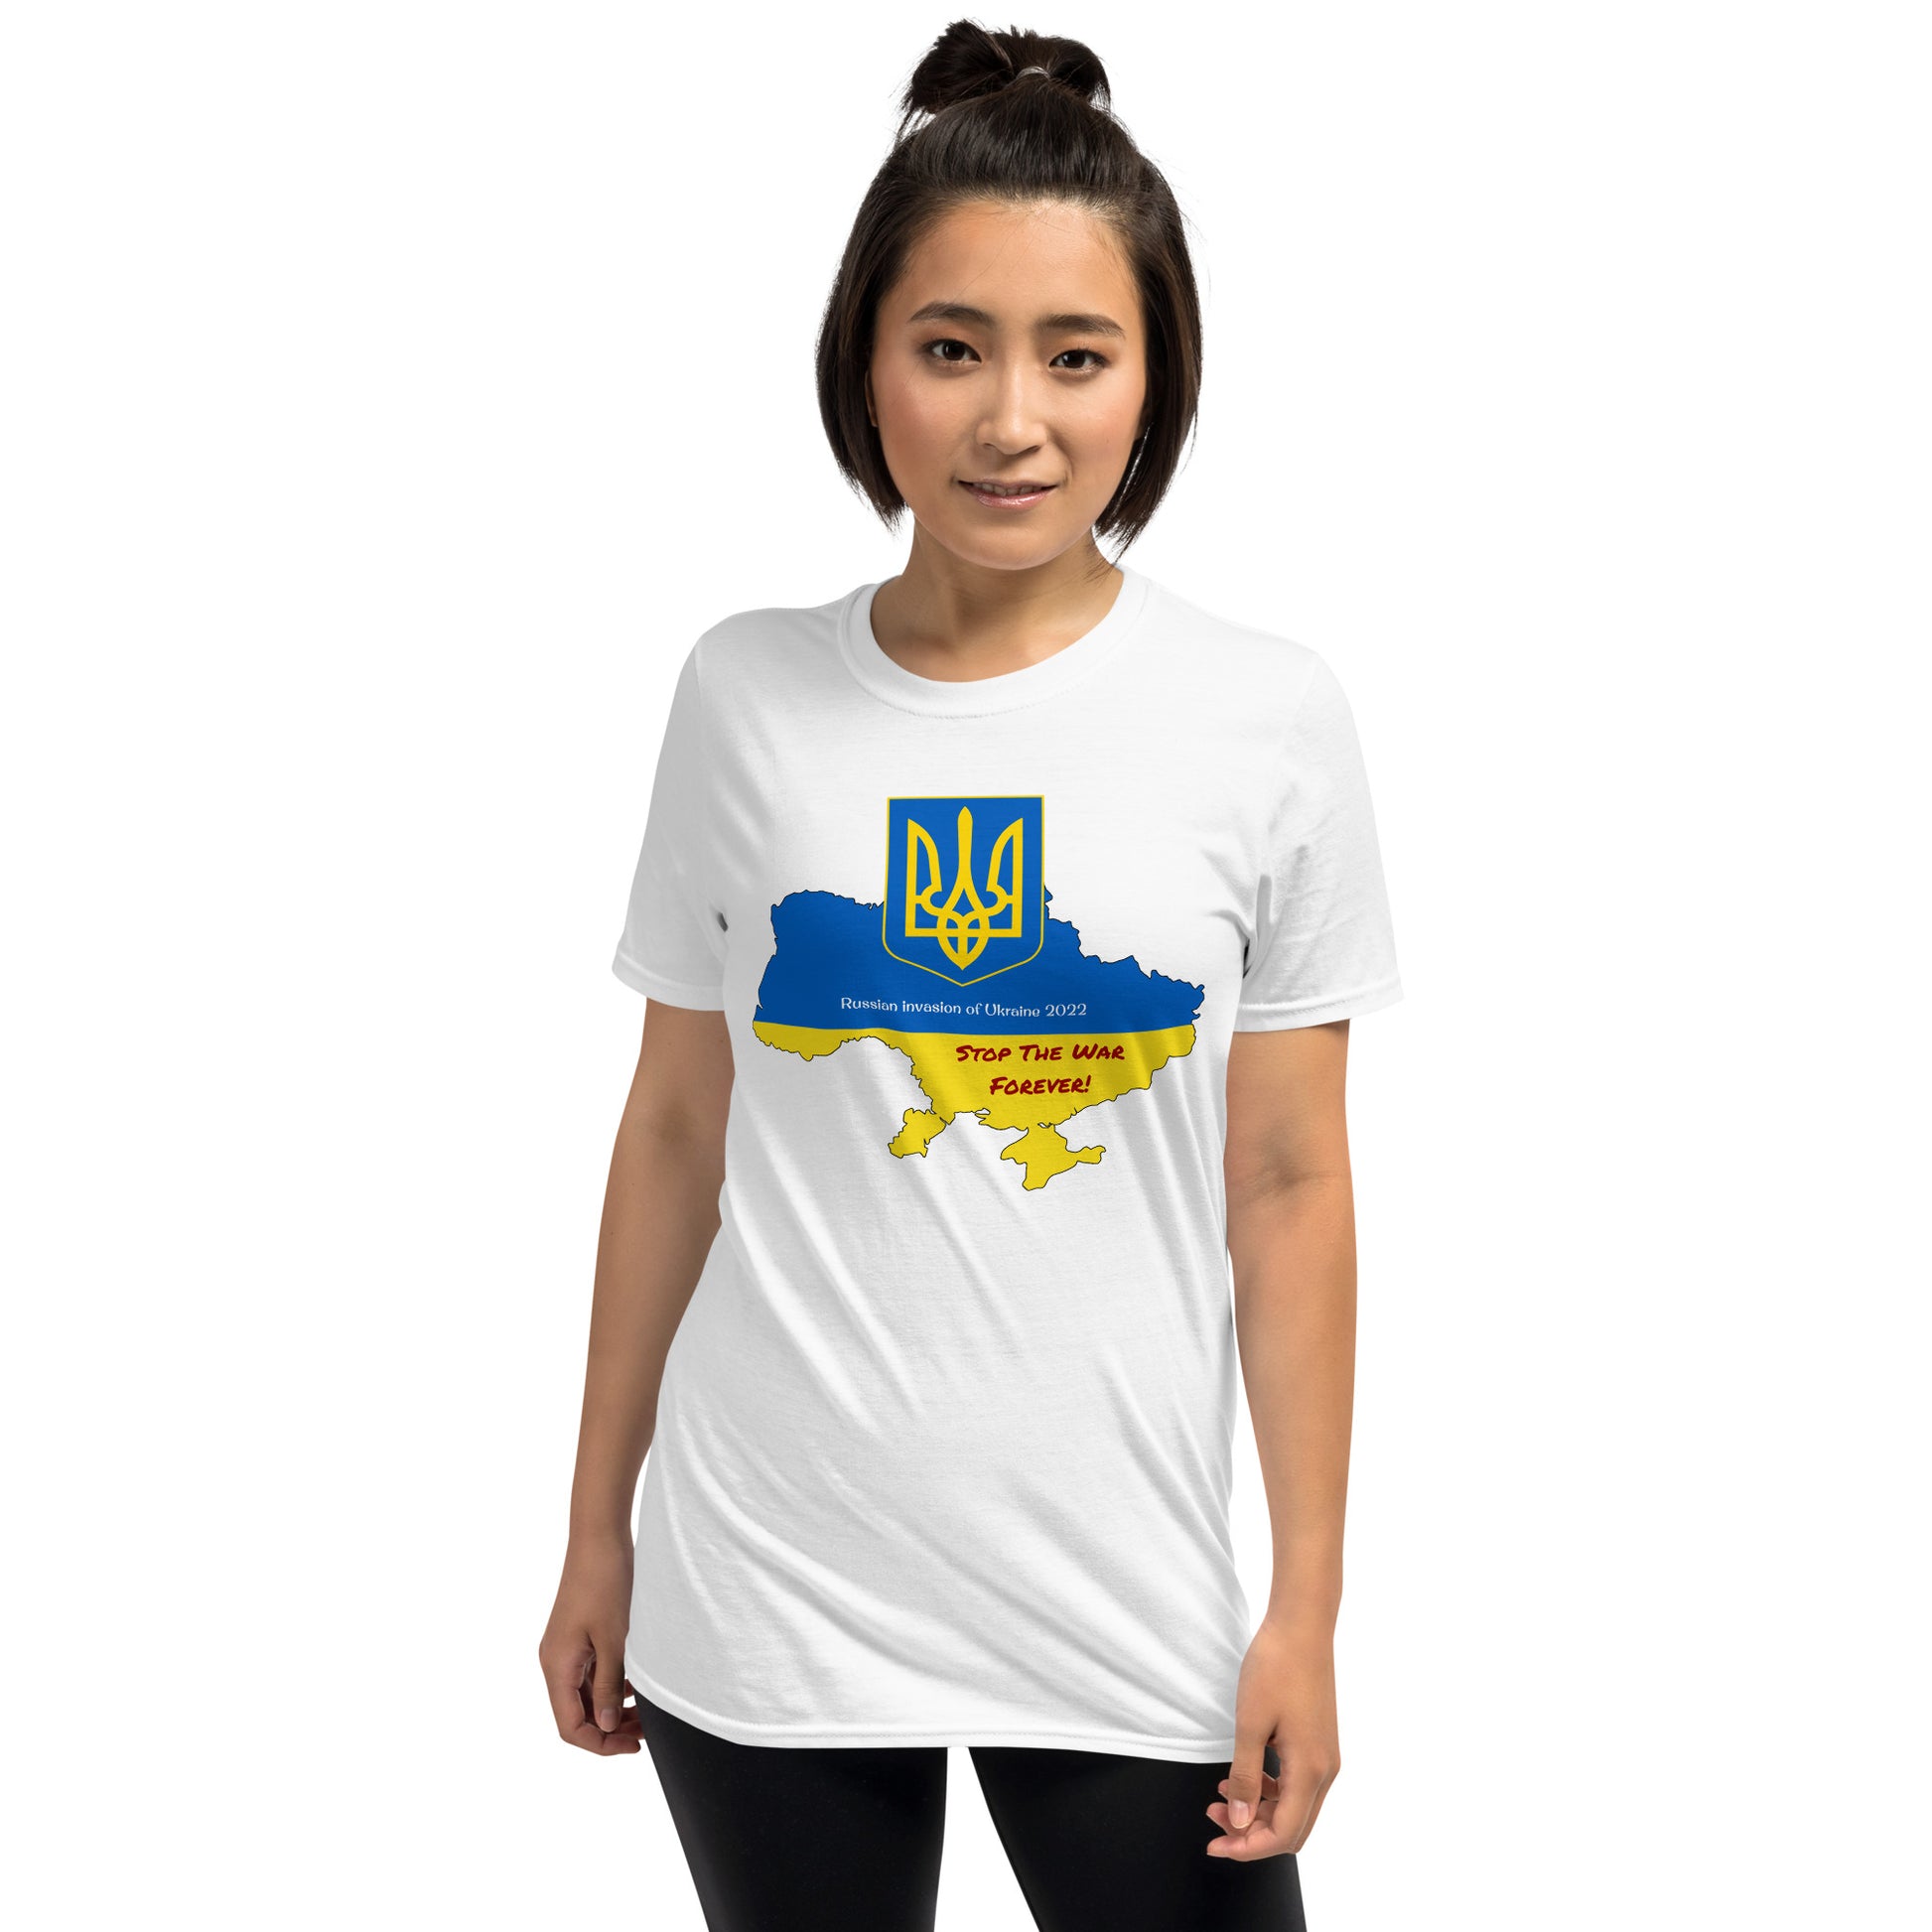 Stop The War Shirt With Ukrainian Flag / Russian Invasion Of Ukraine 2022 / Unisex Anti War Shirt - YVDdesign